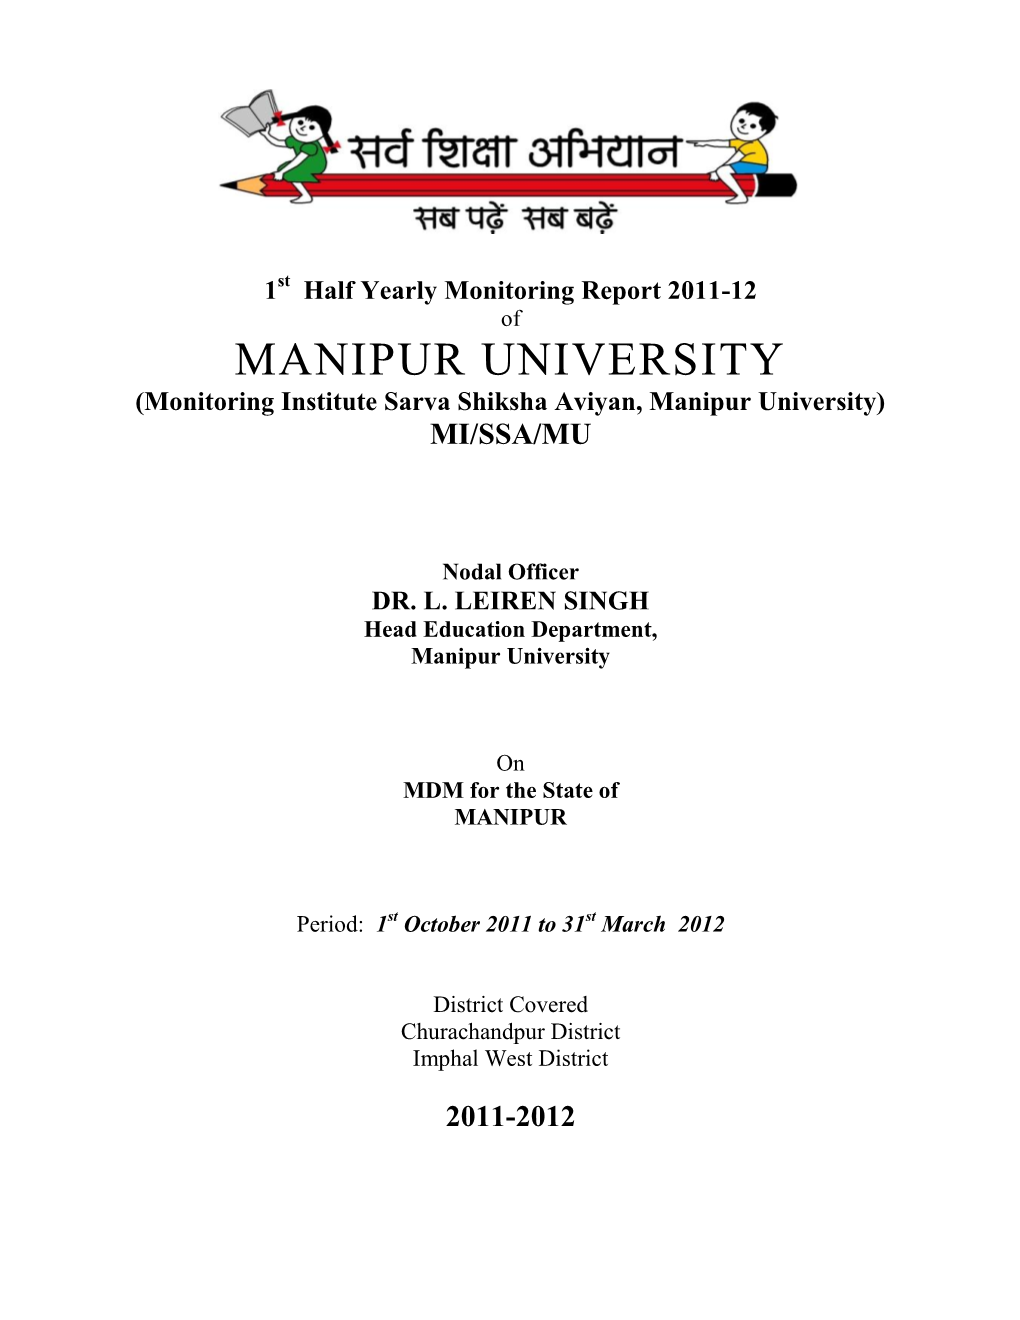 MANIPUR UNIVERSITY (Monitoring Institute Sarva Shiksha Aviyan, Manipur University) MI/SSA/MU